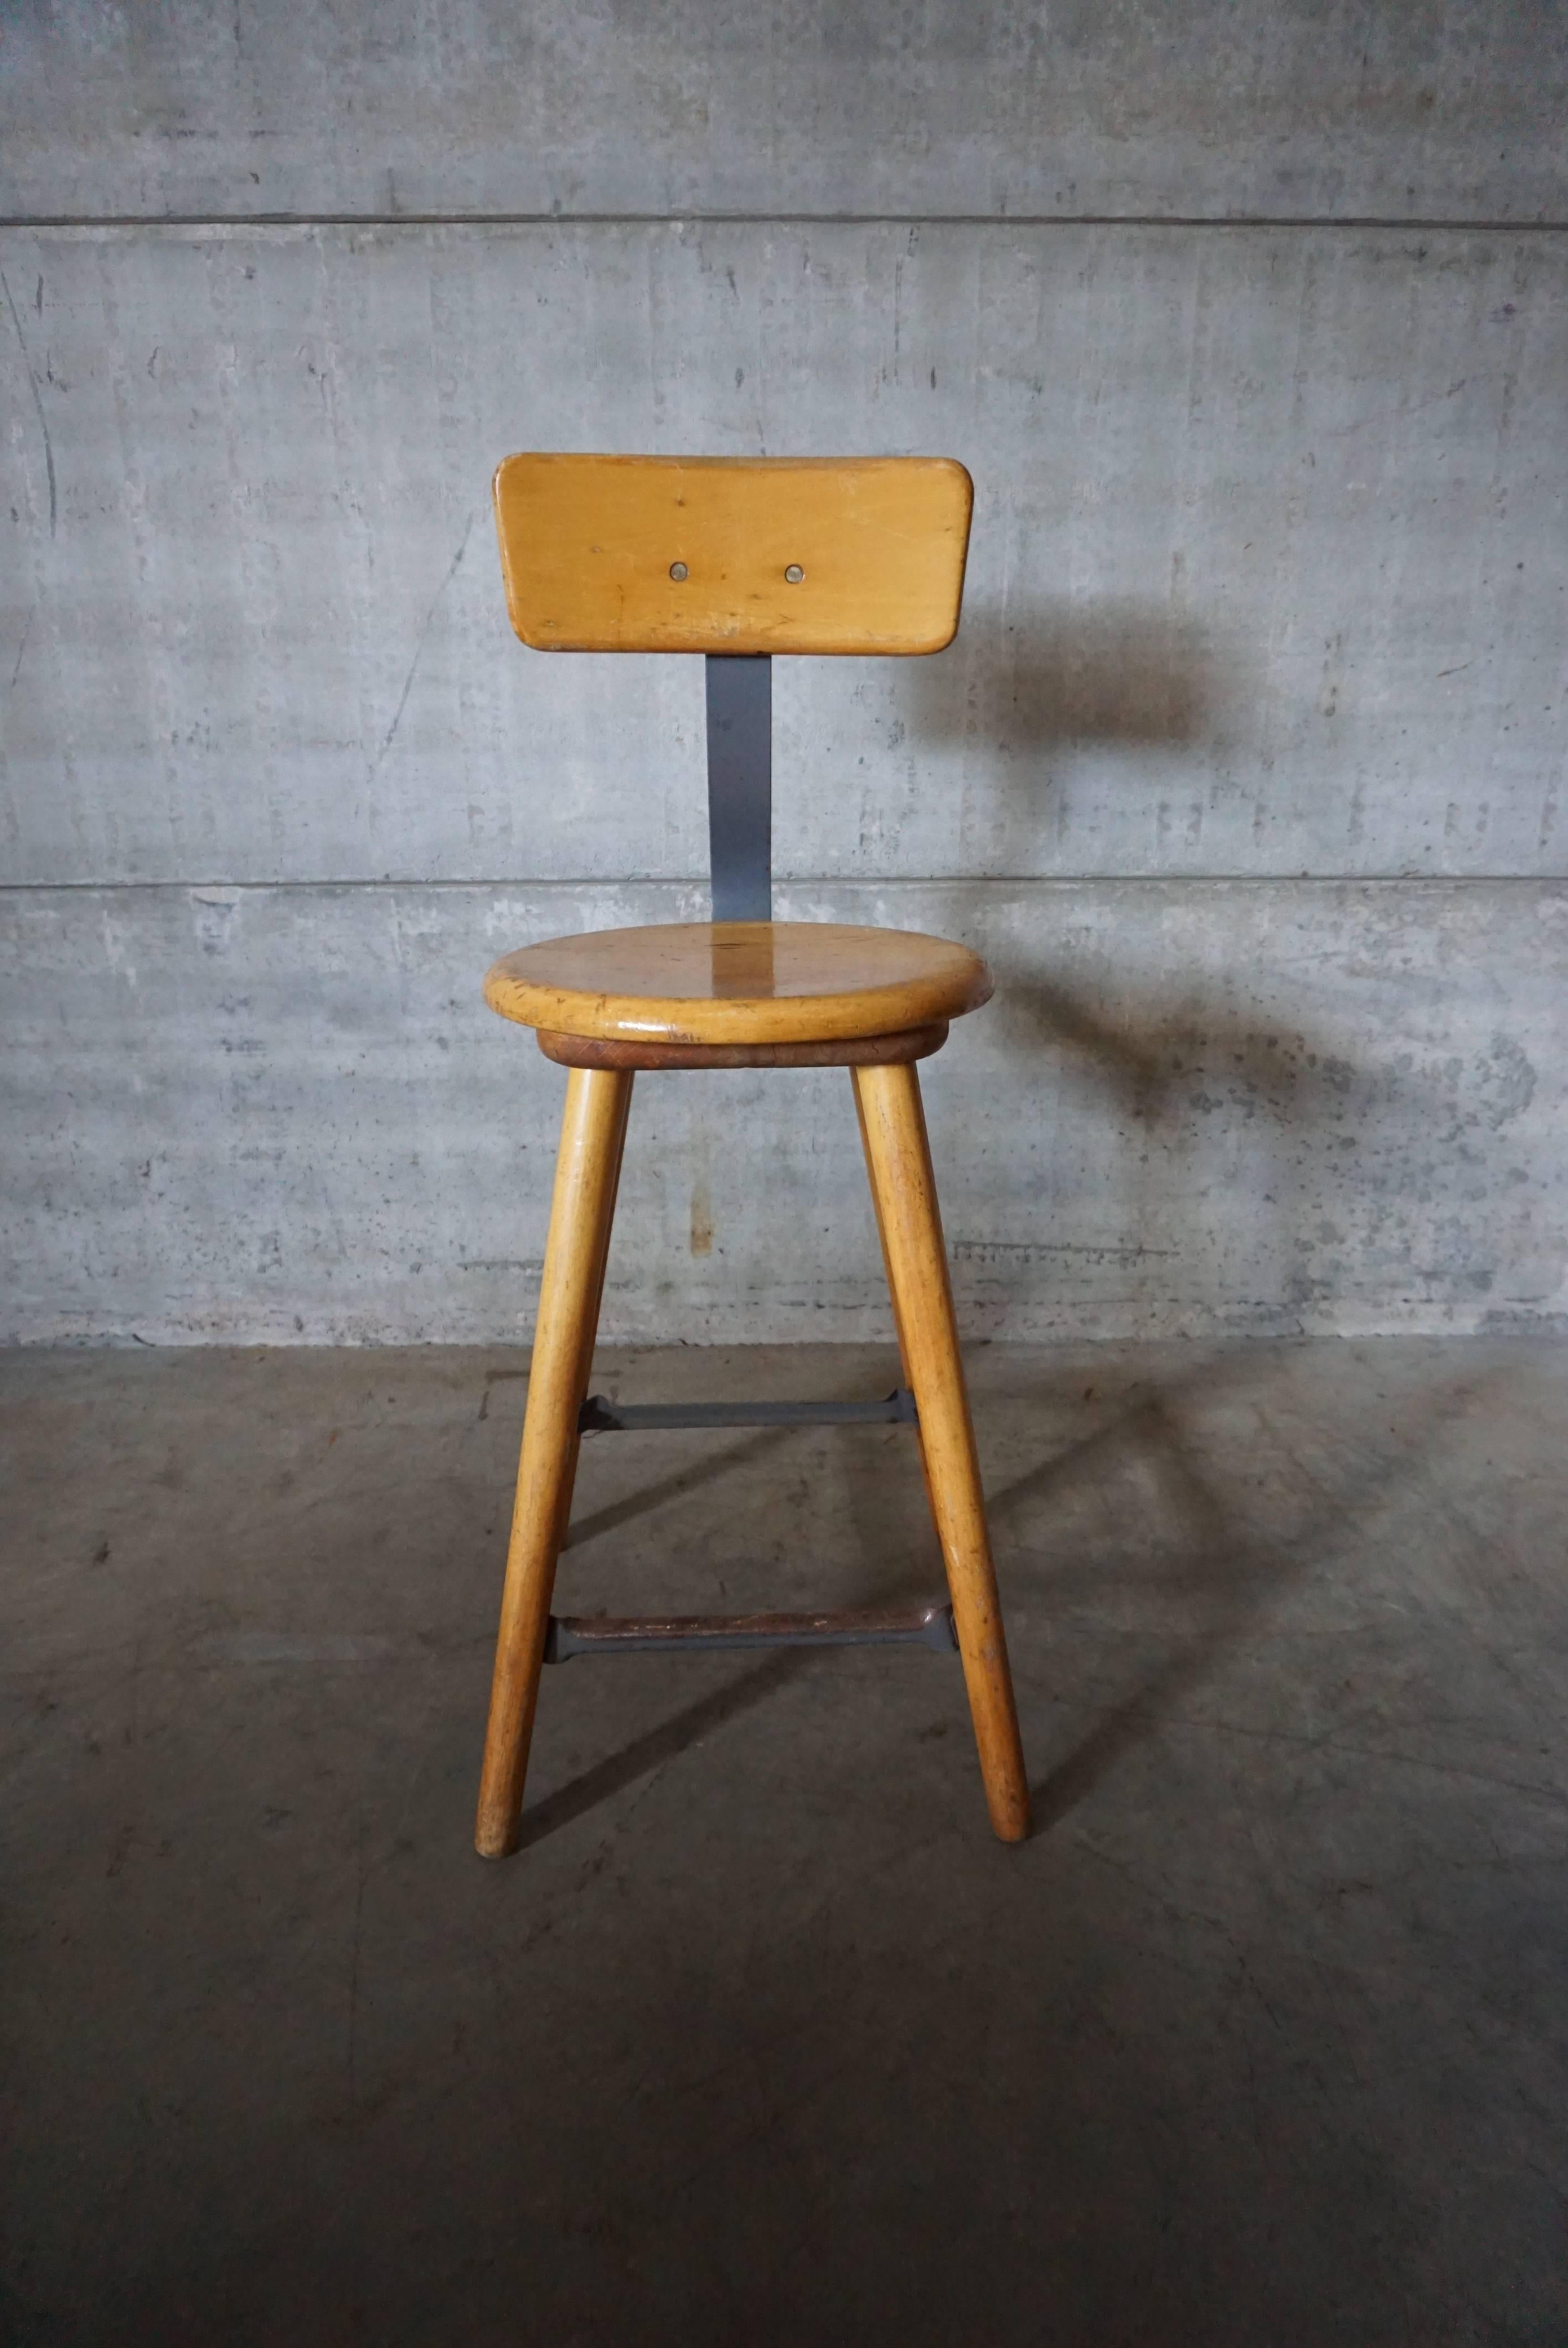 20th Century German Industrial Workshop Chair / Bar Stool